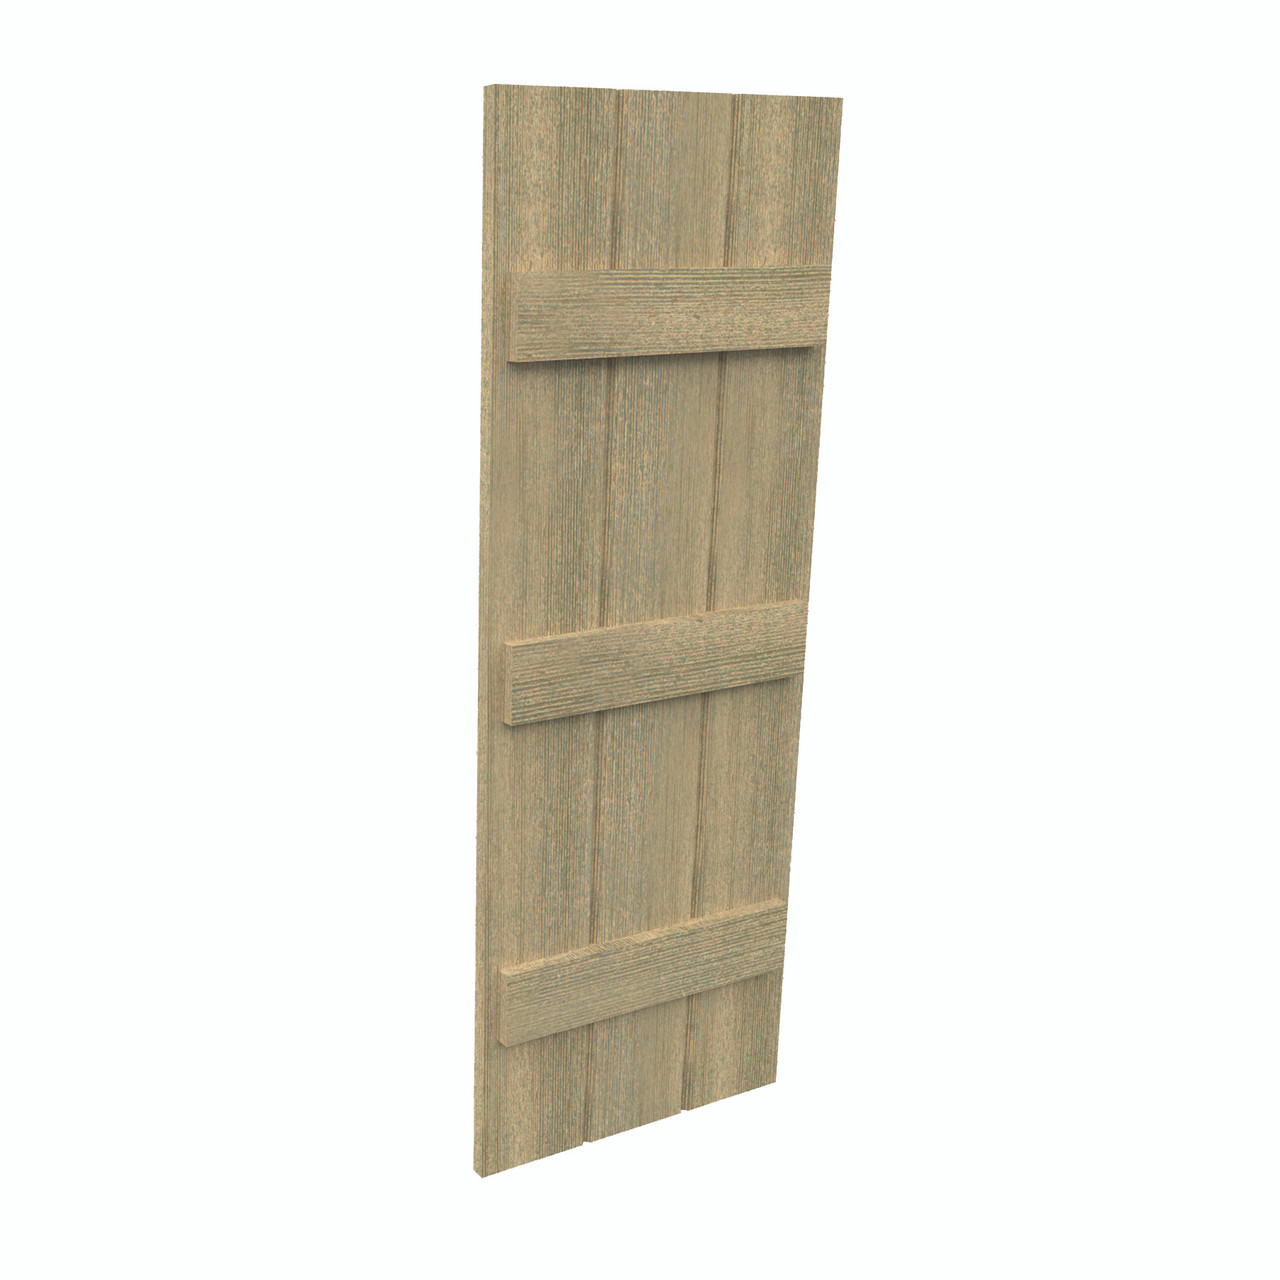 18 inch by 95 inch Plank Shutter with 3-Plank, 3-Batten